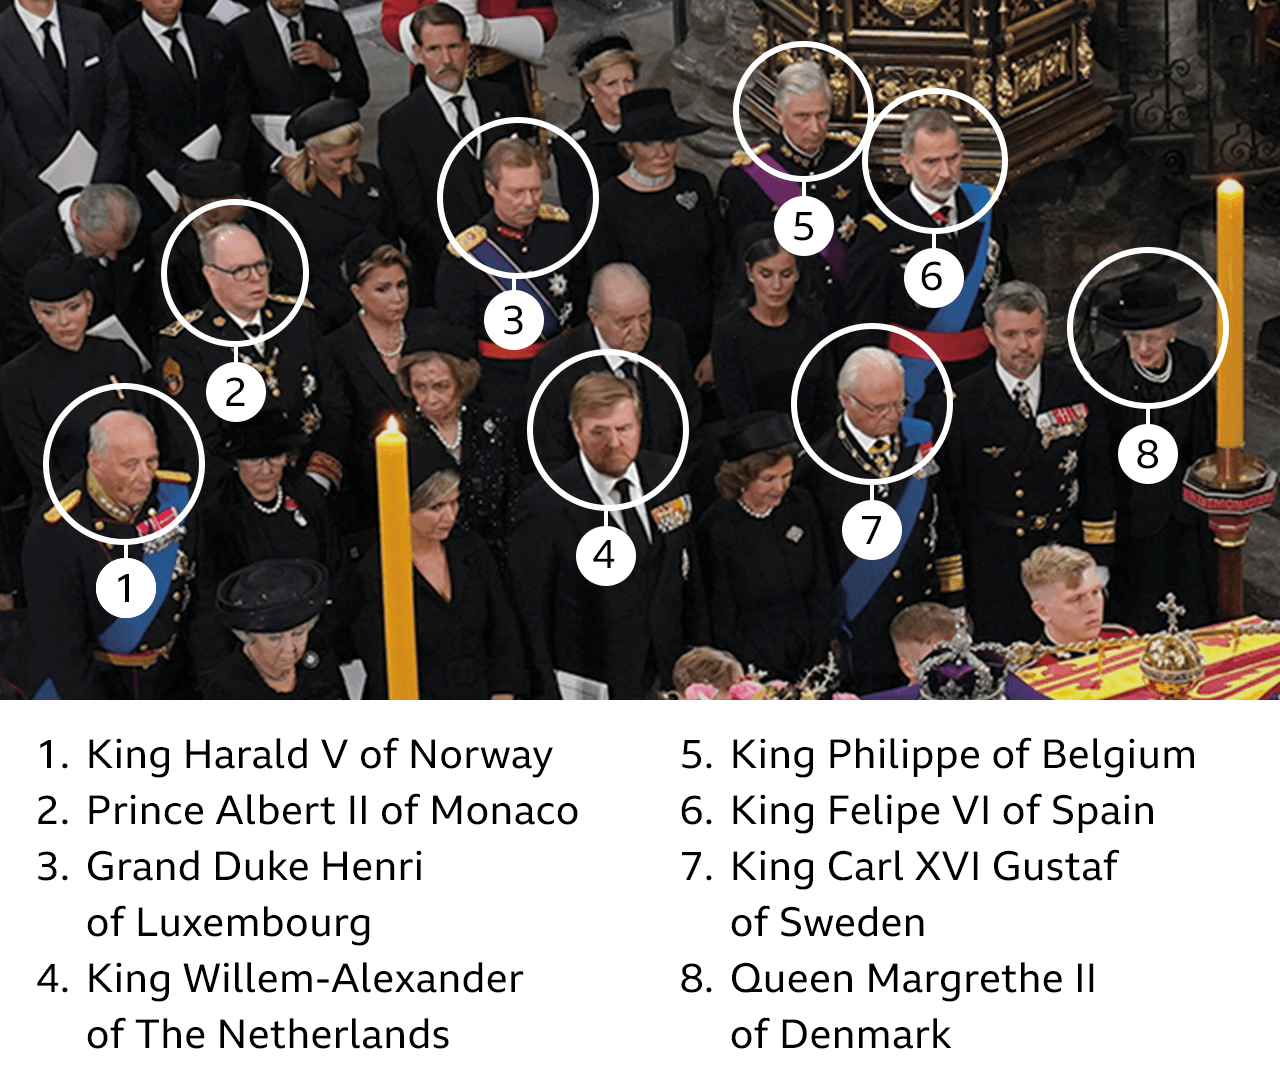 King Harald V of Norway, Prince Albert II of Monaco, Grand Duke Henri of Luxembourg, King Willem-Alexander of The Netherlands, King Philippe of Belgium, King Felipe VI of Spain, King Carl XVI Gustaf of Sweden, Queen Margrethe II of Denmark